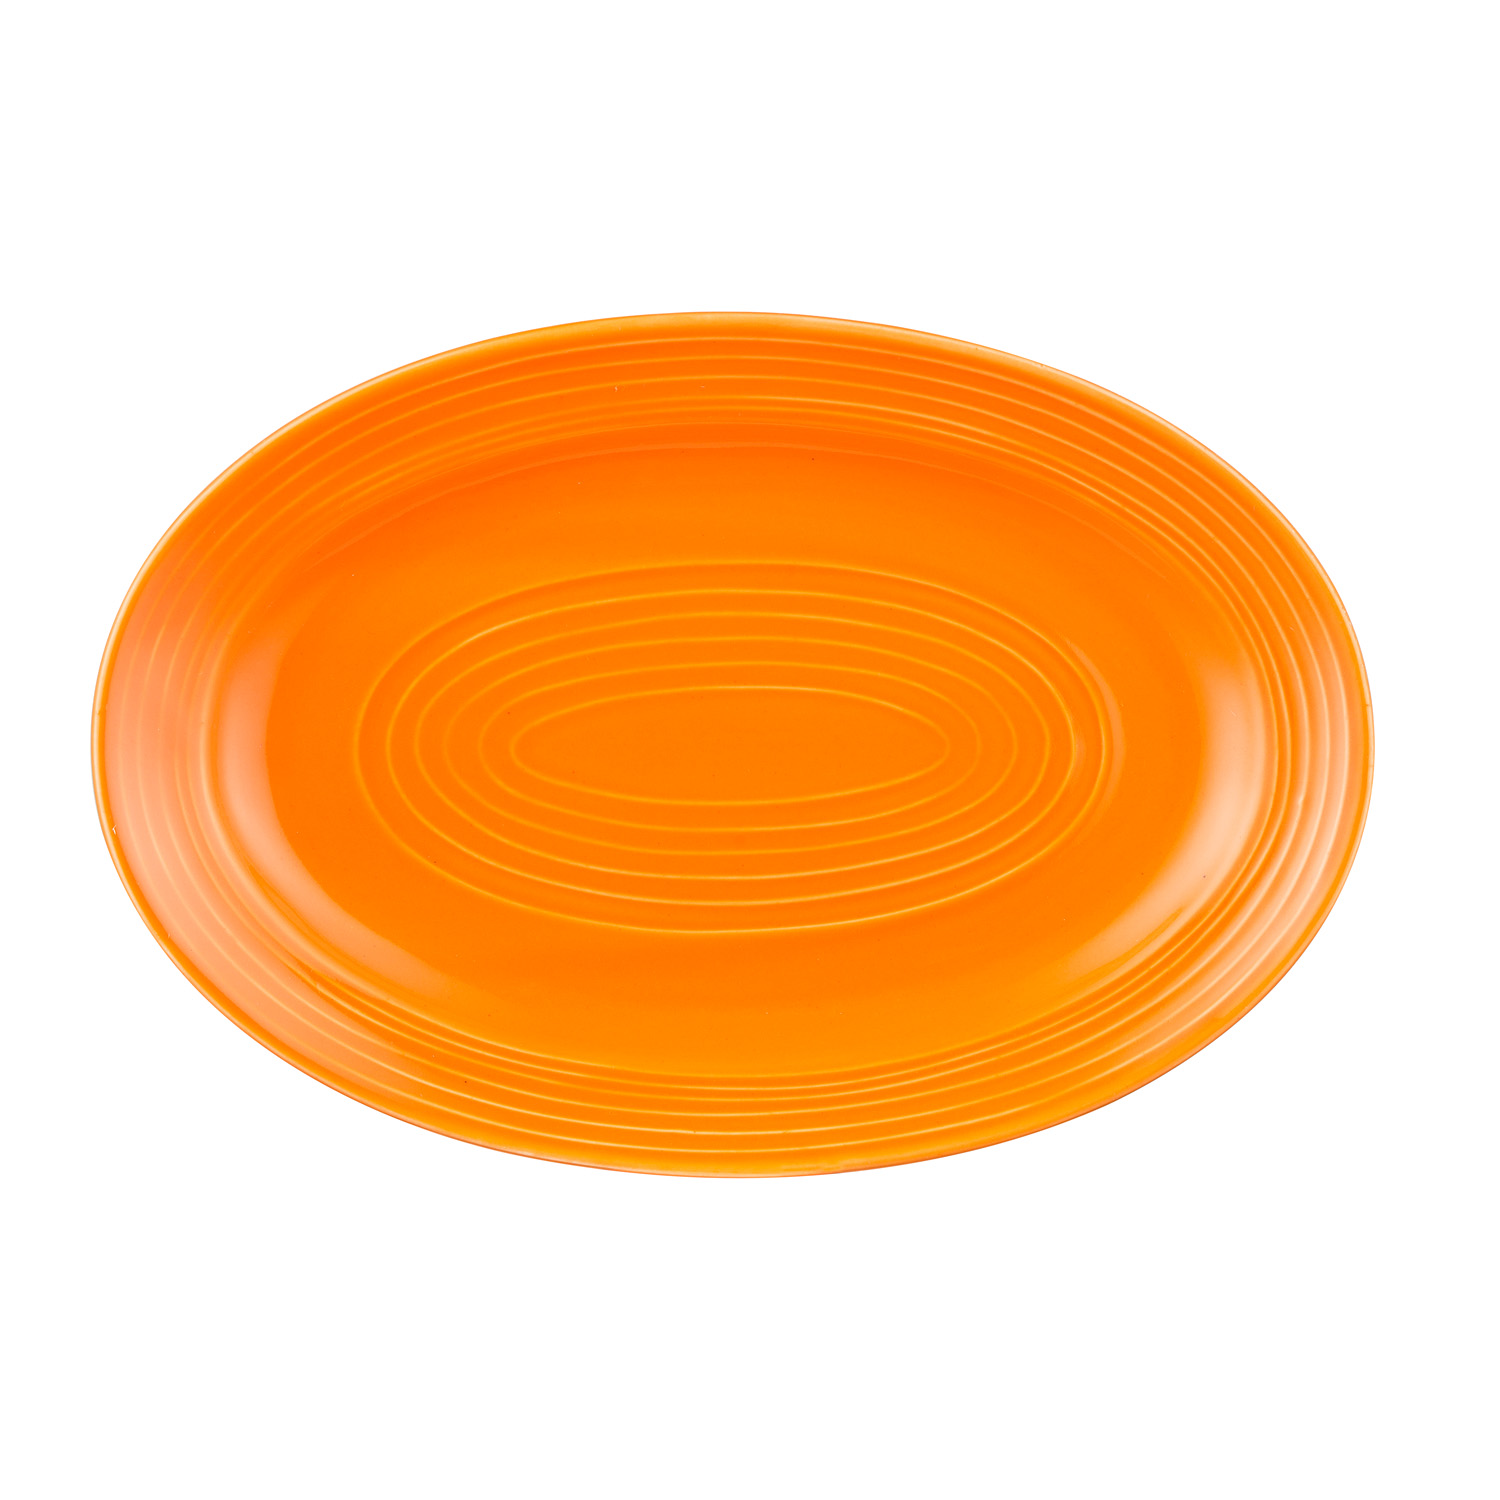 CAC China TG-12-TNG Tango Embossed Porcelain Tangerine Oval Platter 10 5/8"  - 2 dozen